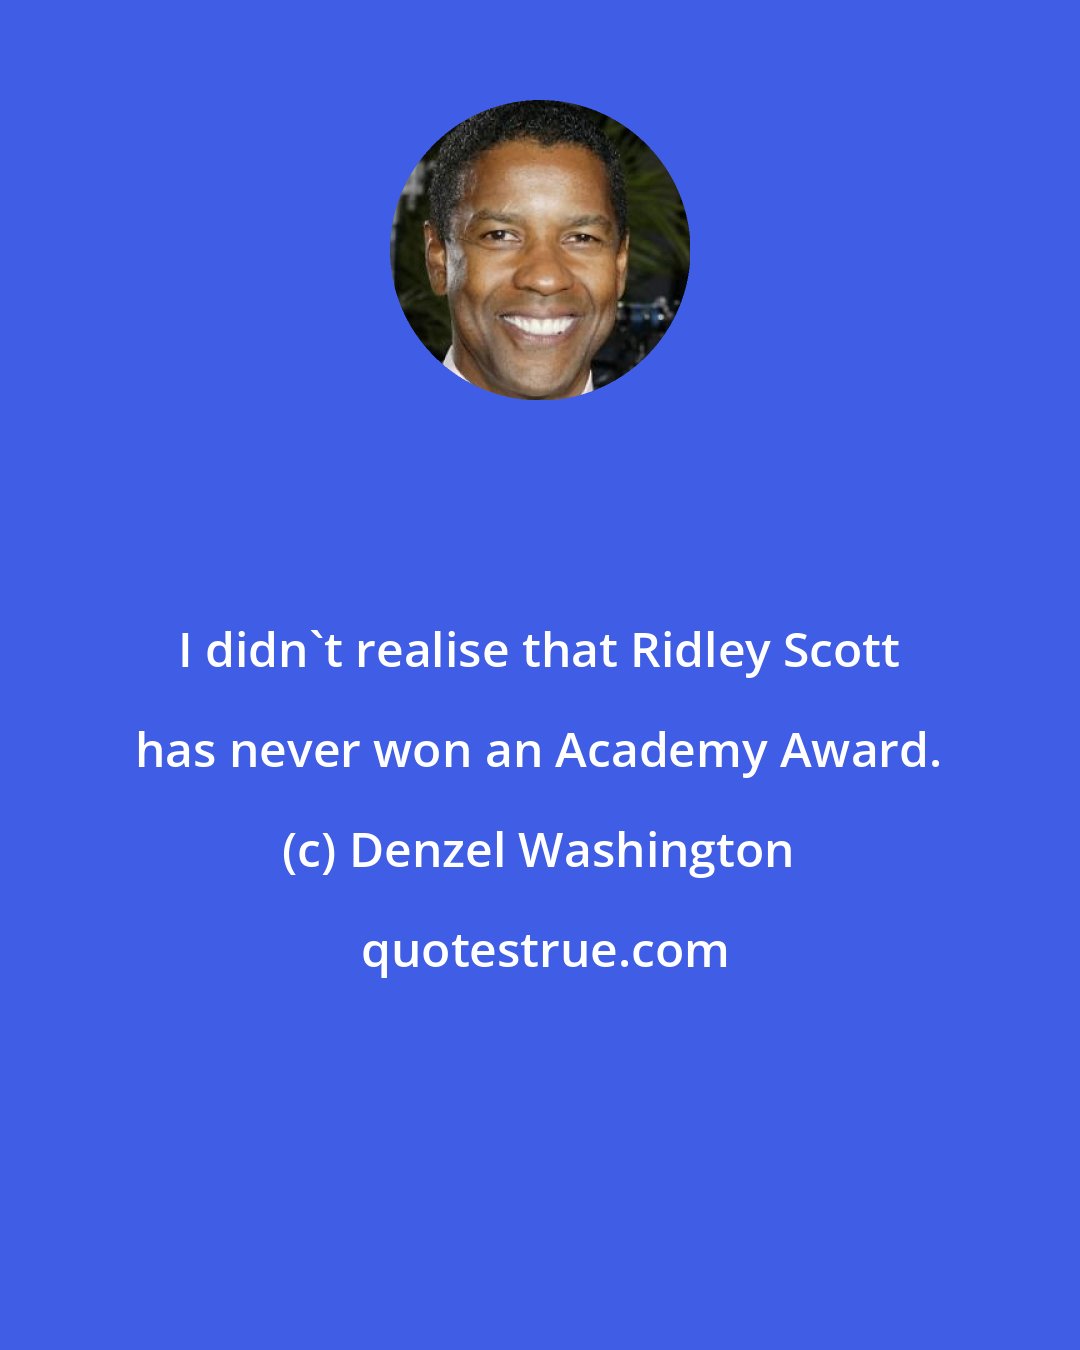 Denzel Washington: I didn't realise that Ridley Scott has never won an Academy Award.